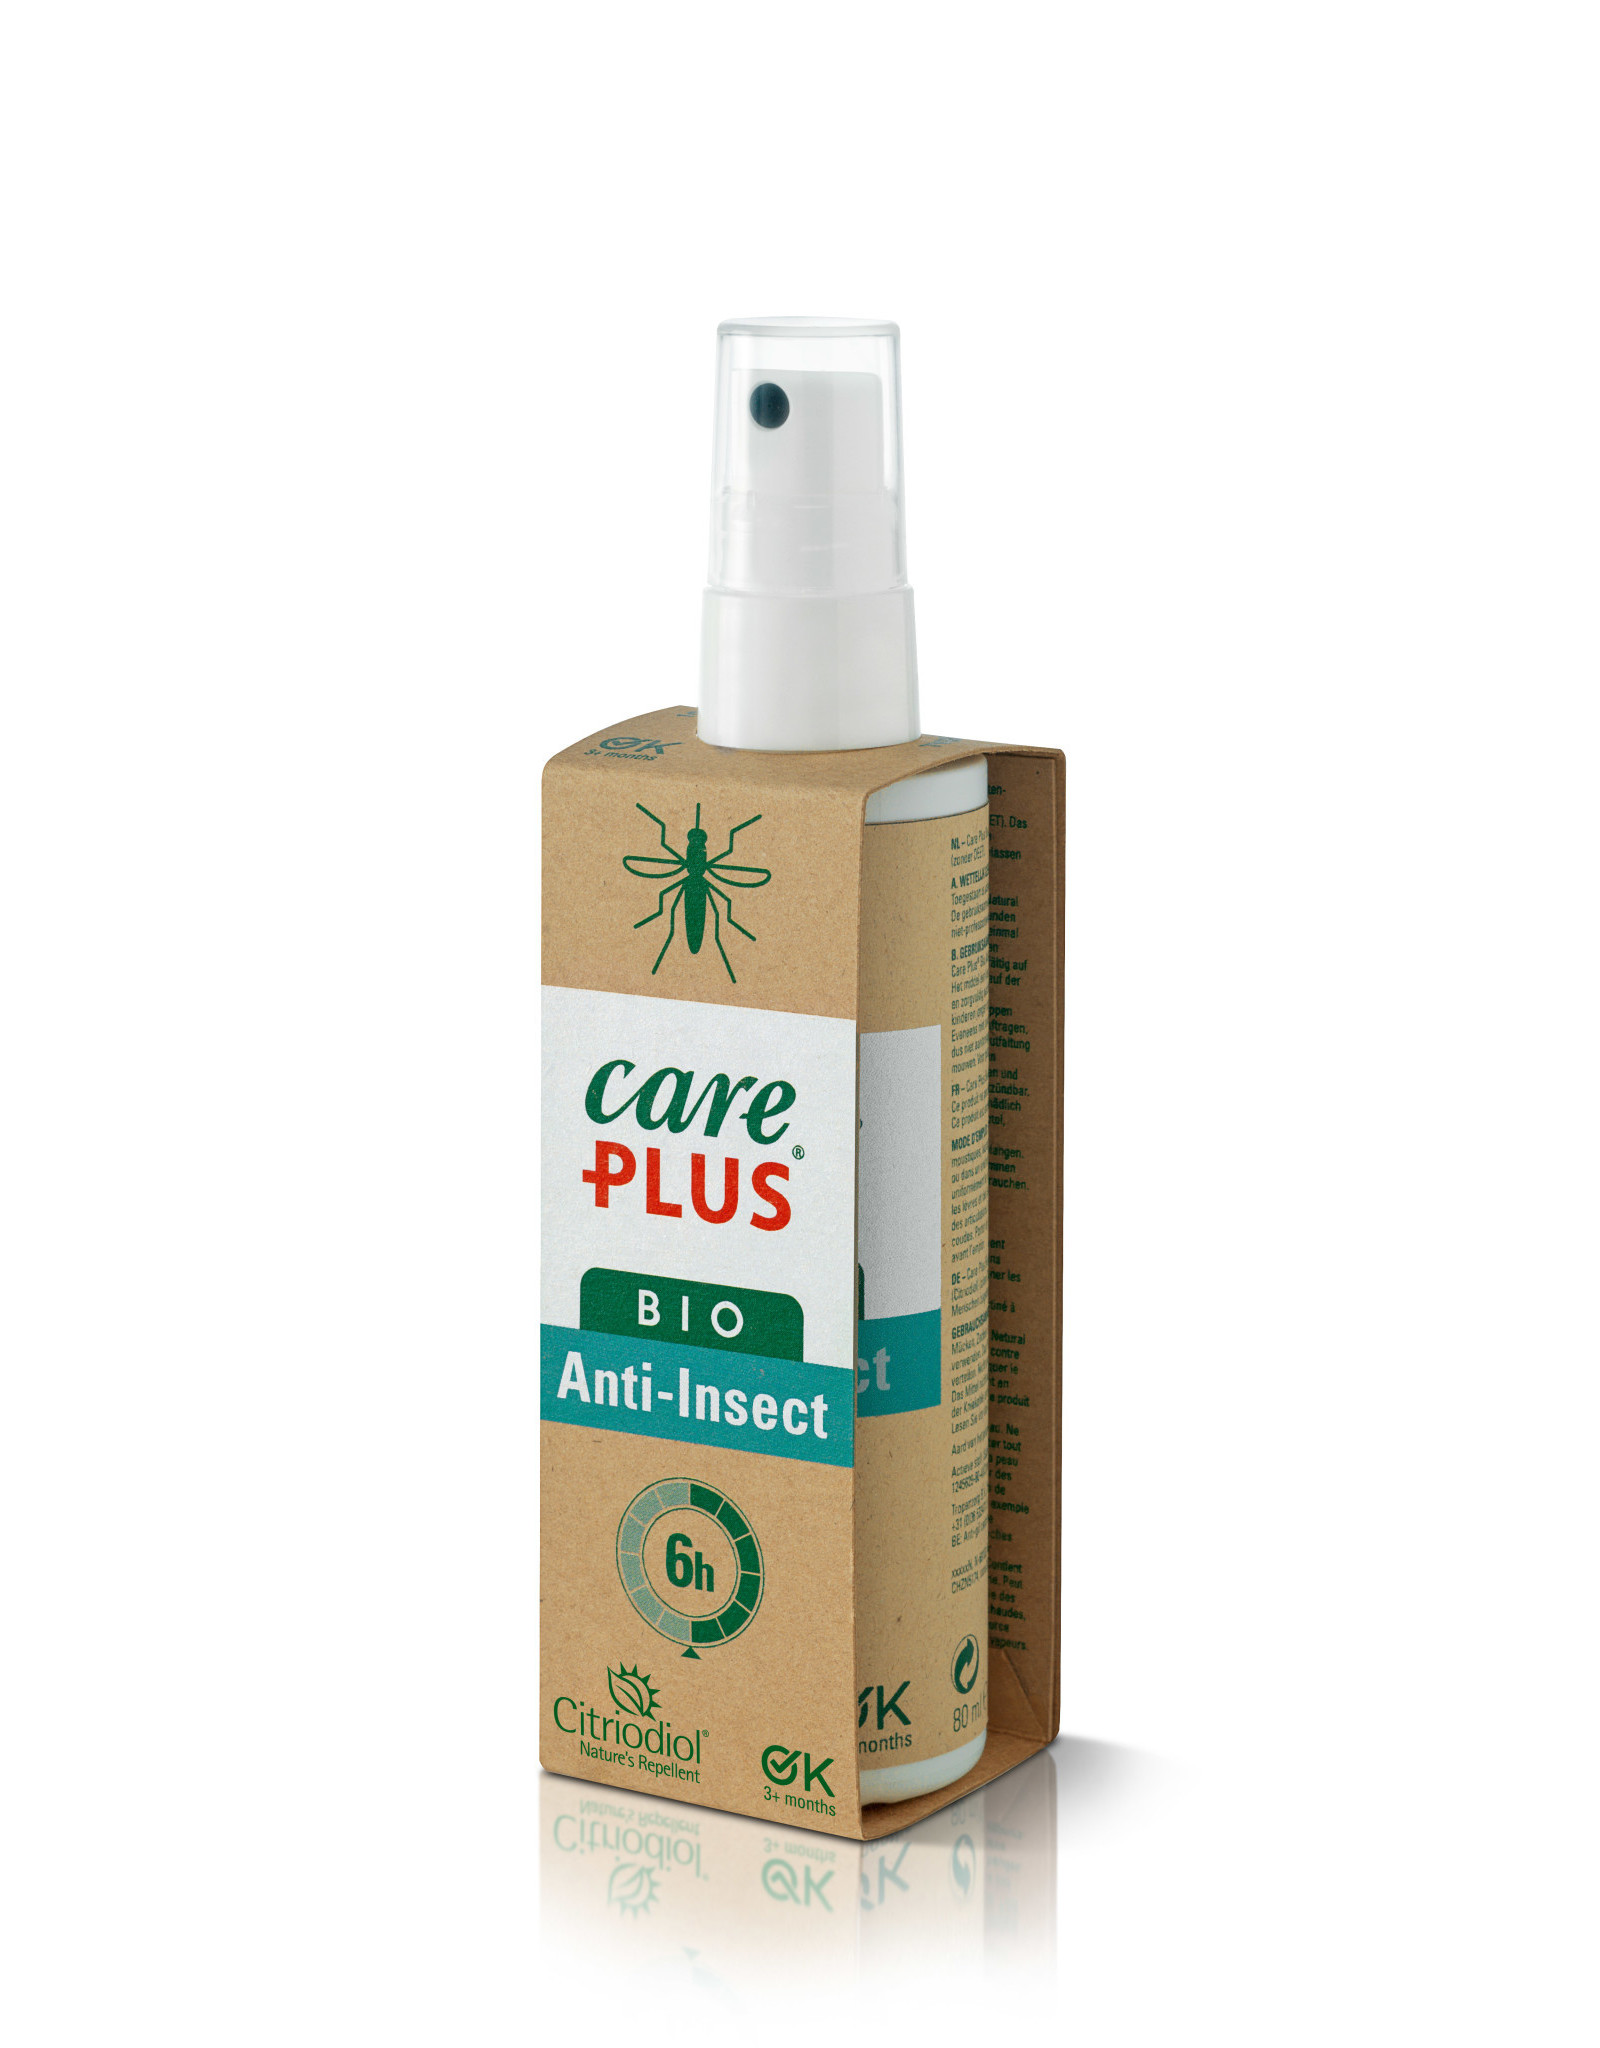 careplus Care Plus® Bio Anti-Insect Naturel Spray - 6h protection - 80ml